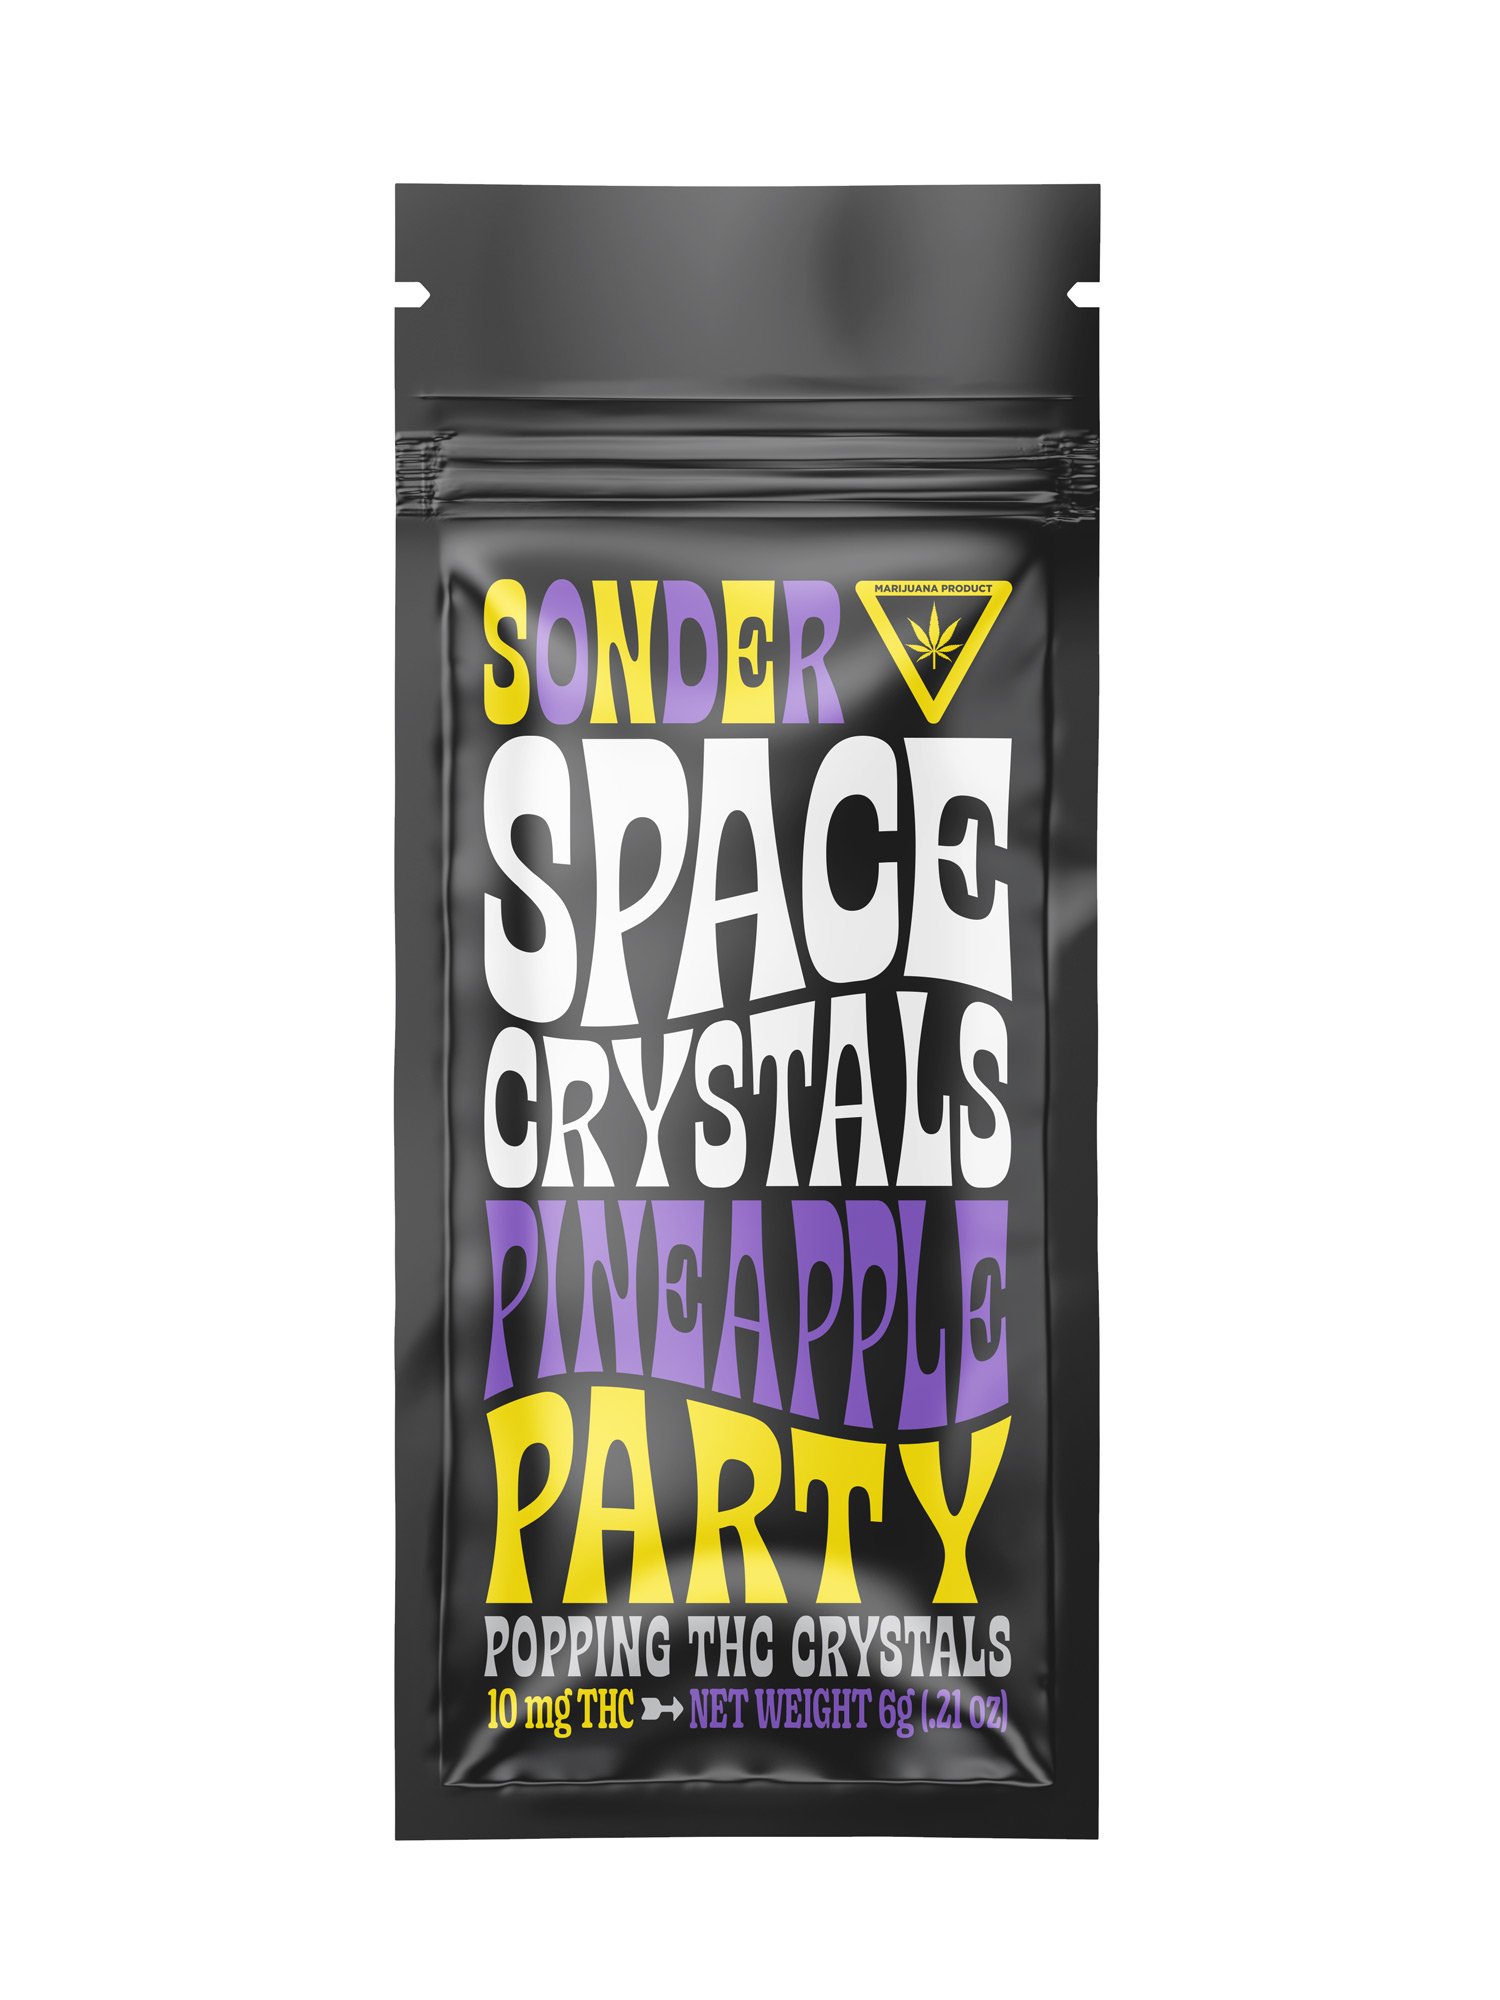 sonder_nv_space_crystals_front_3.jpg